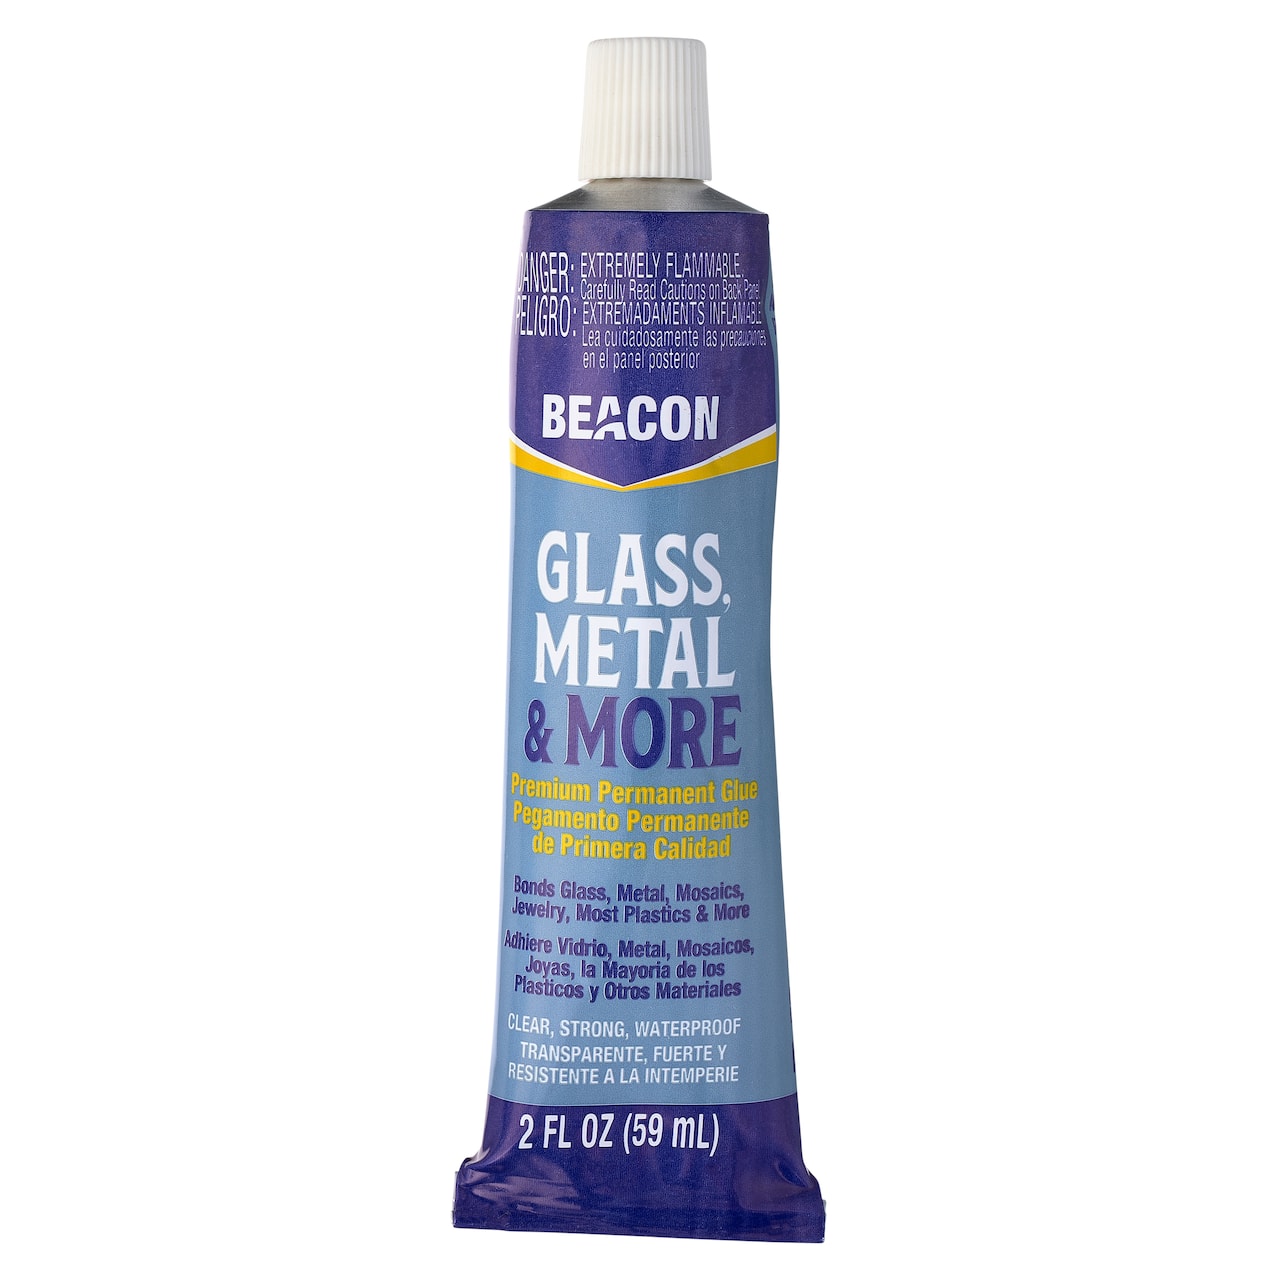 Beacon Glass, Metal &#x26; More&#x2122; Premium Permanent Glue